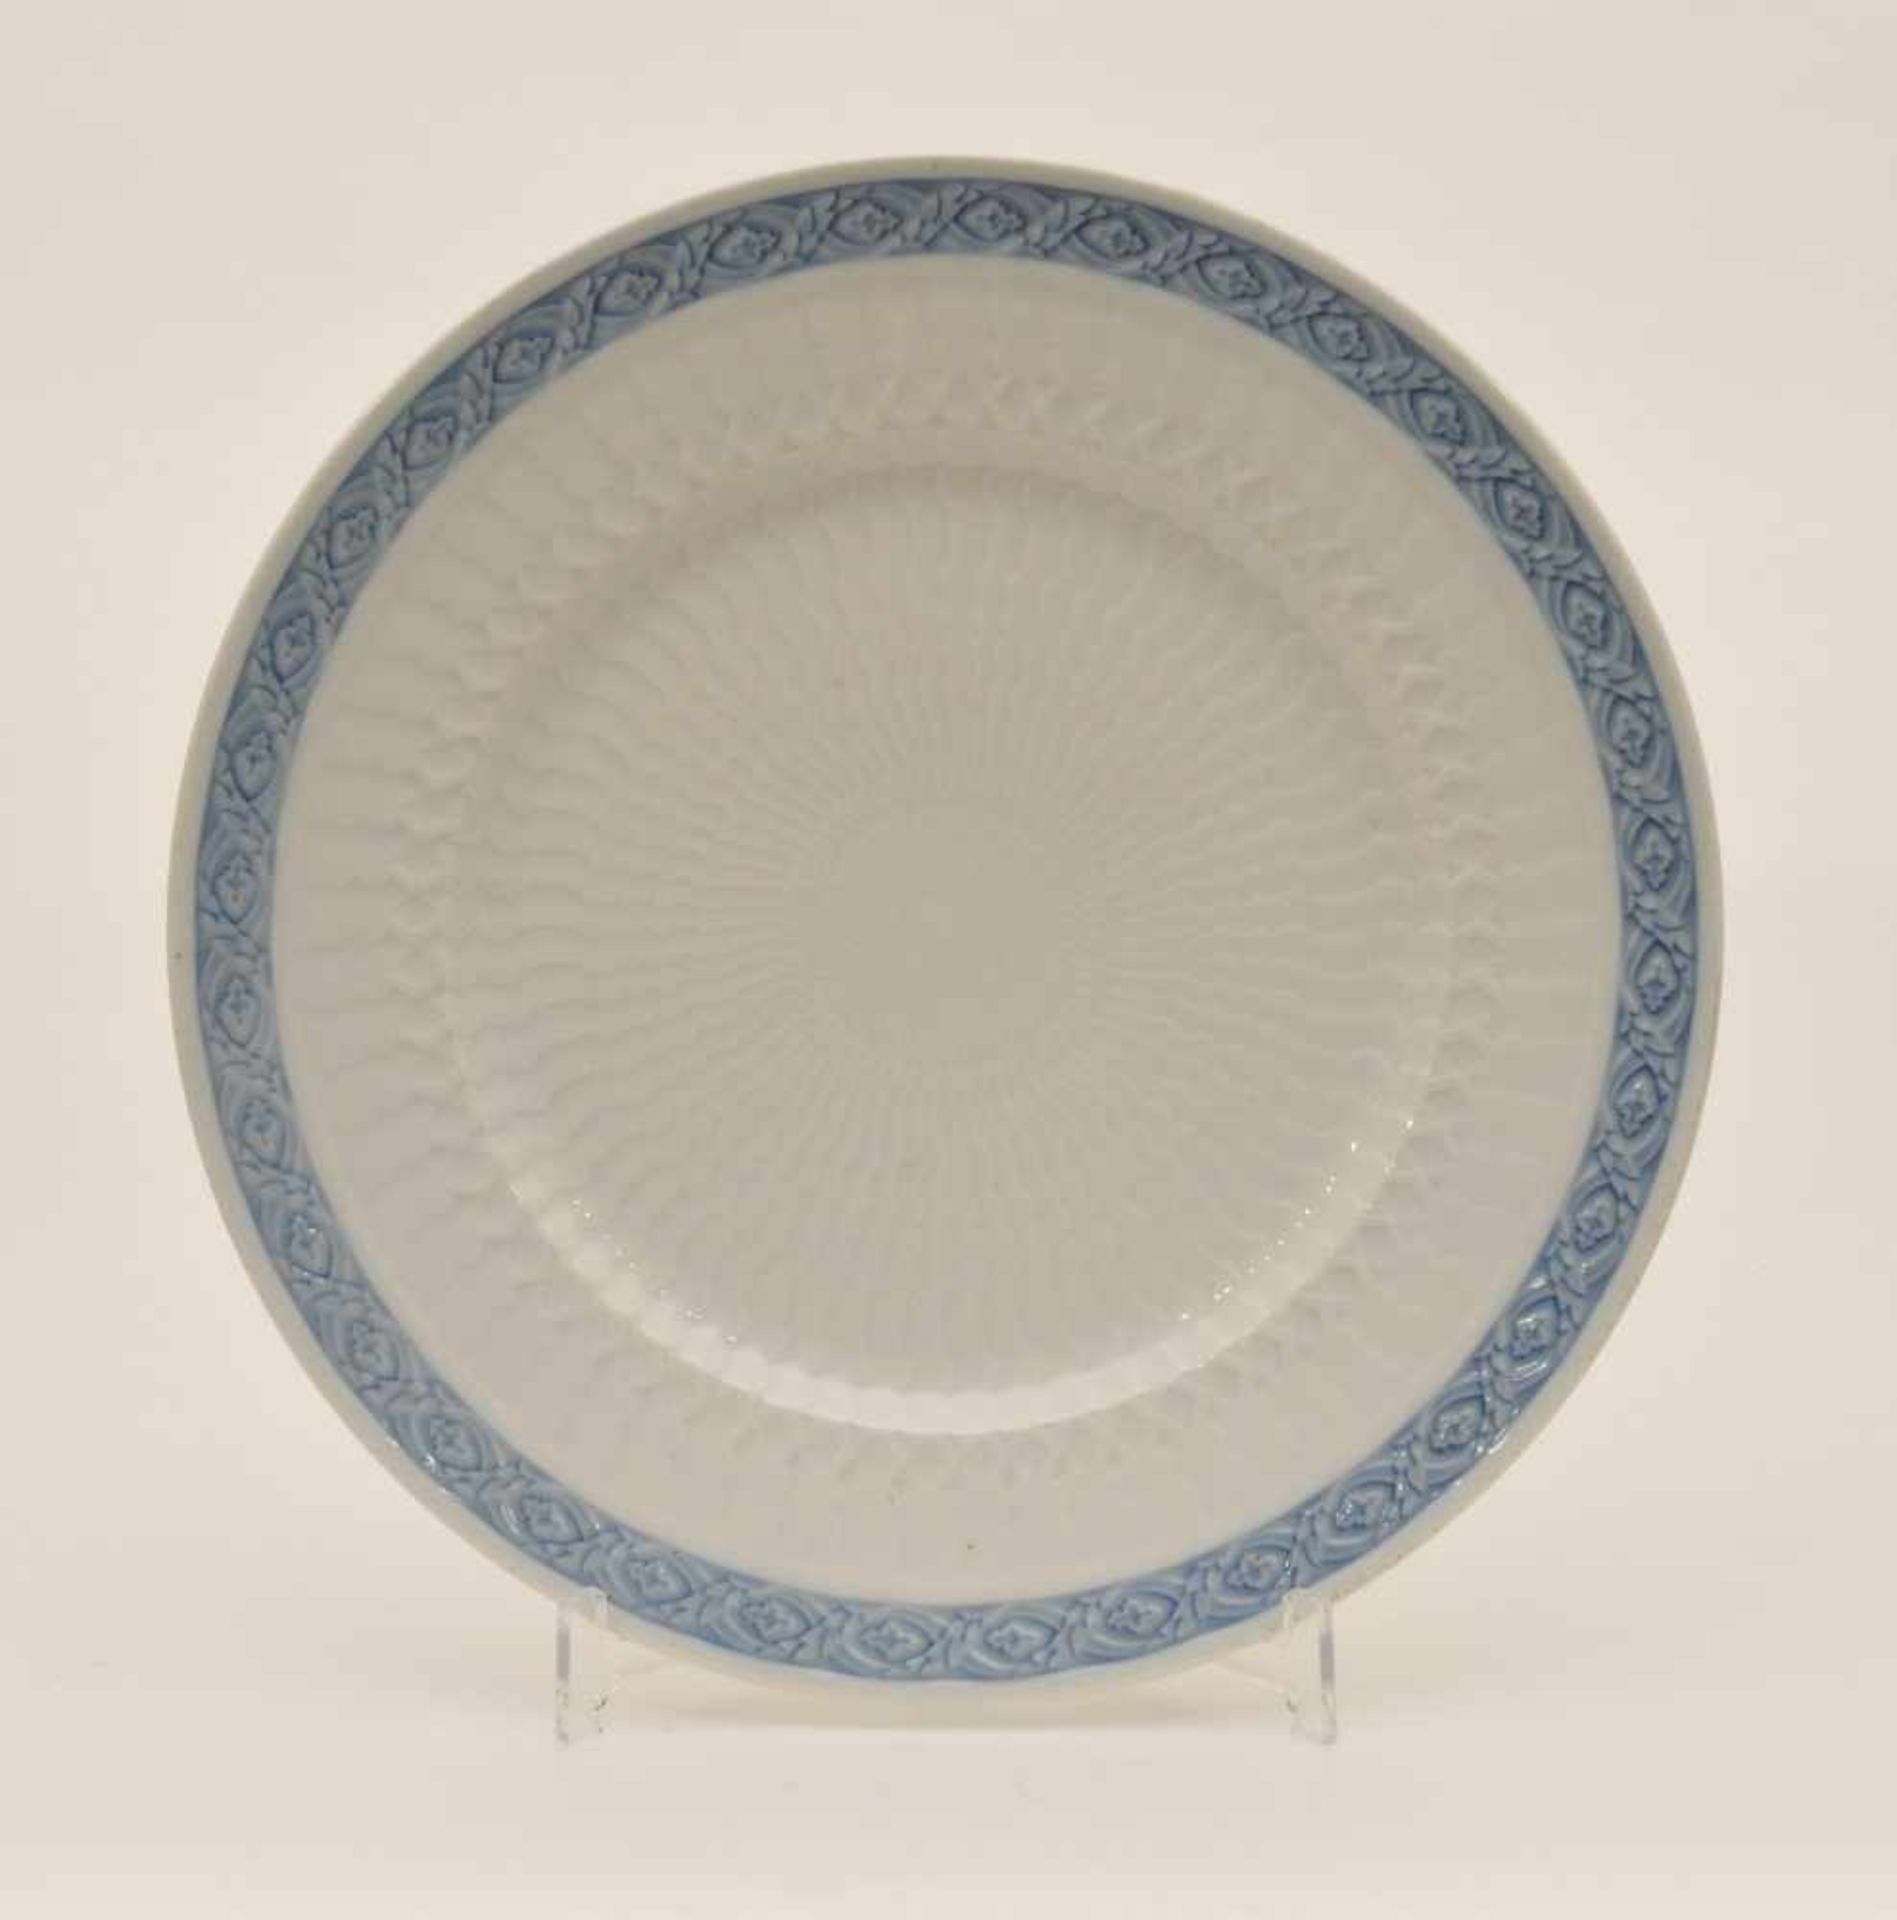 Große Platte gemarkt Delft, weiß, ornamentiert, Blaurand, D. 33,0 cm